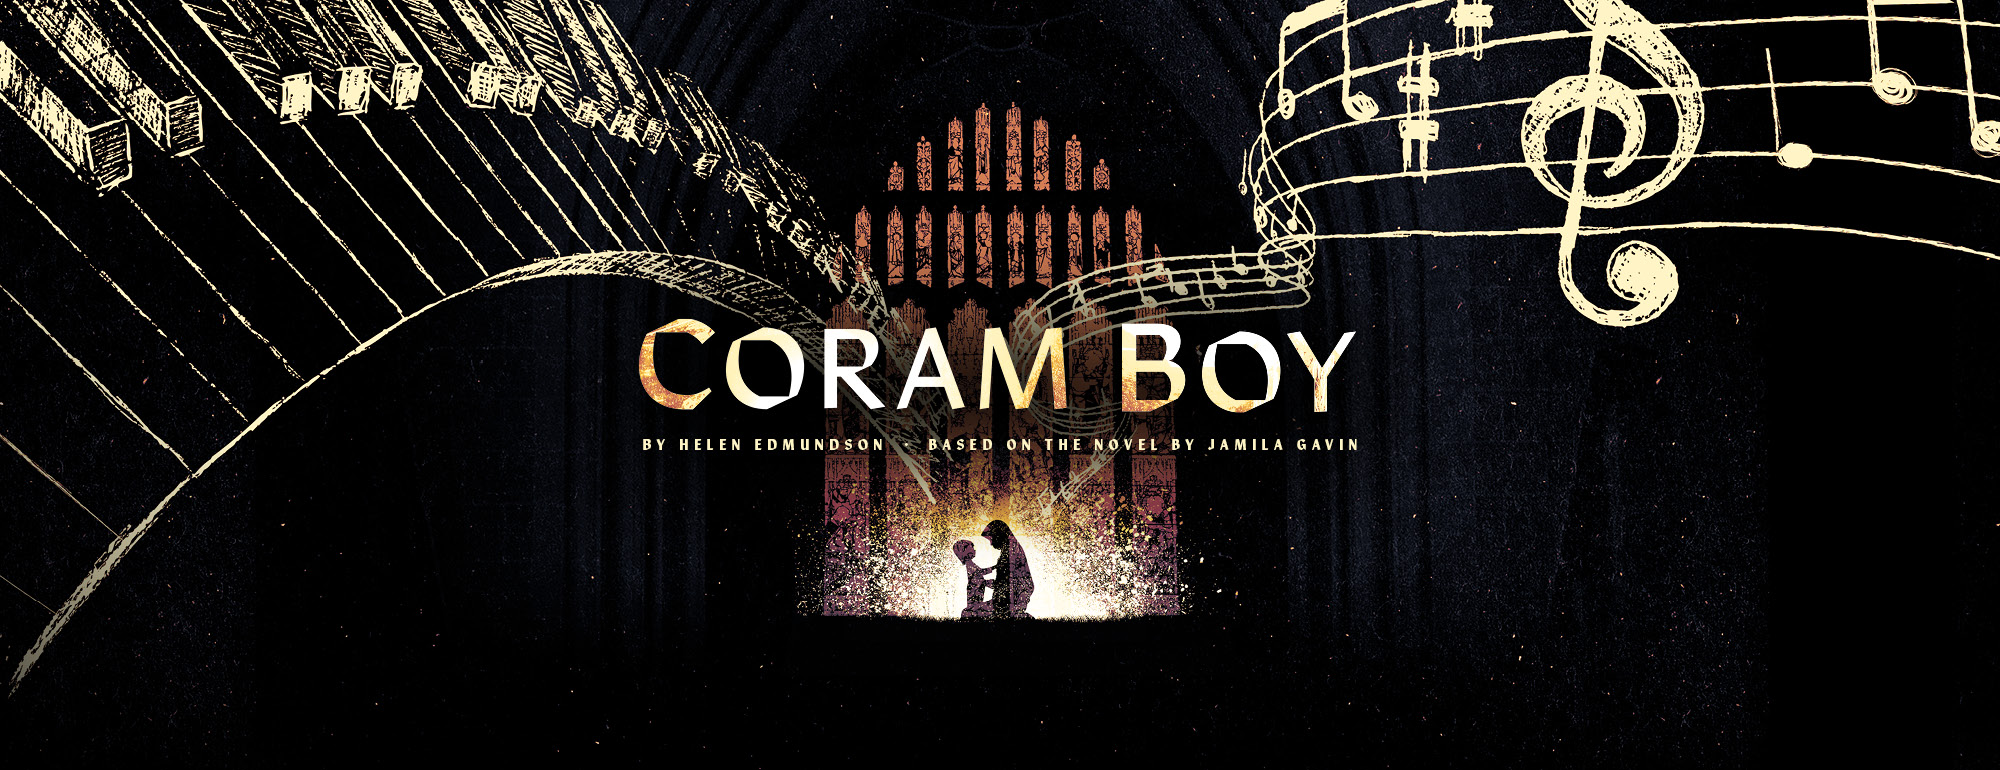 Coram-Boy-2000-x-770